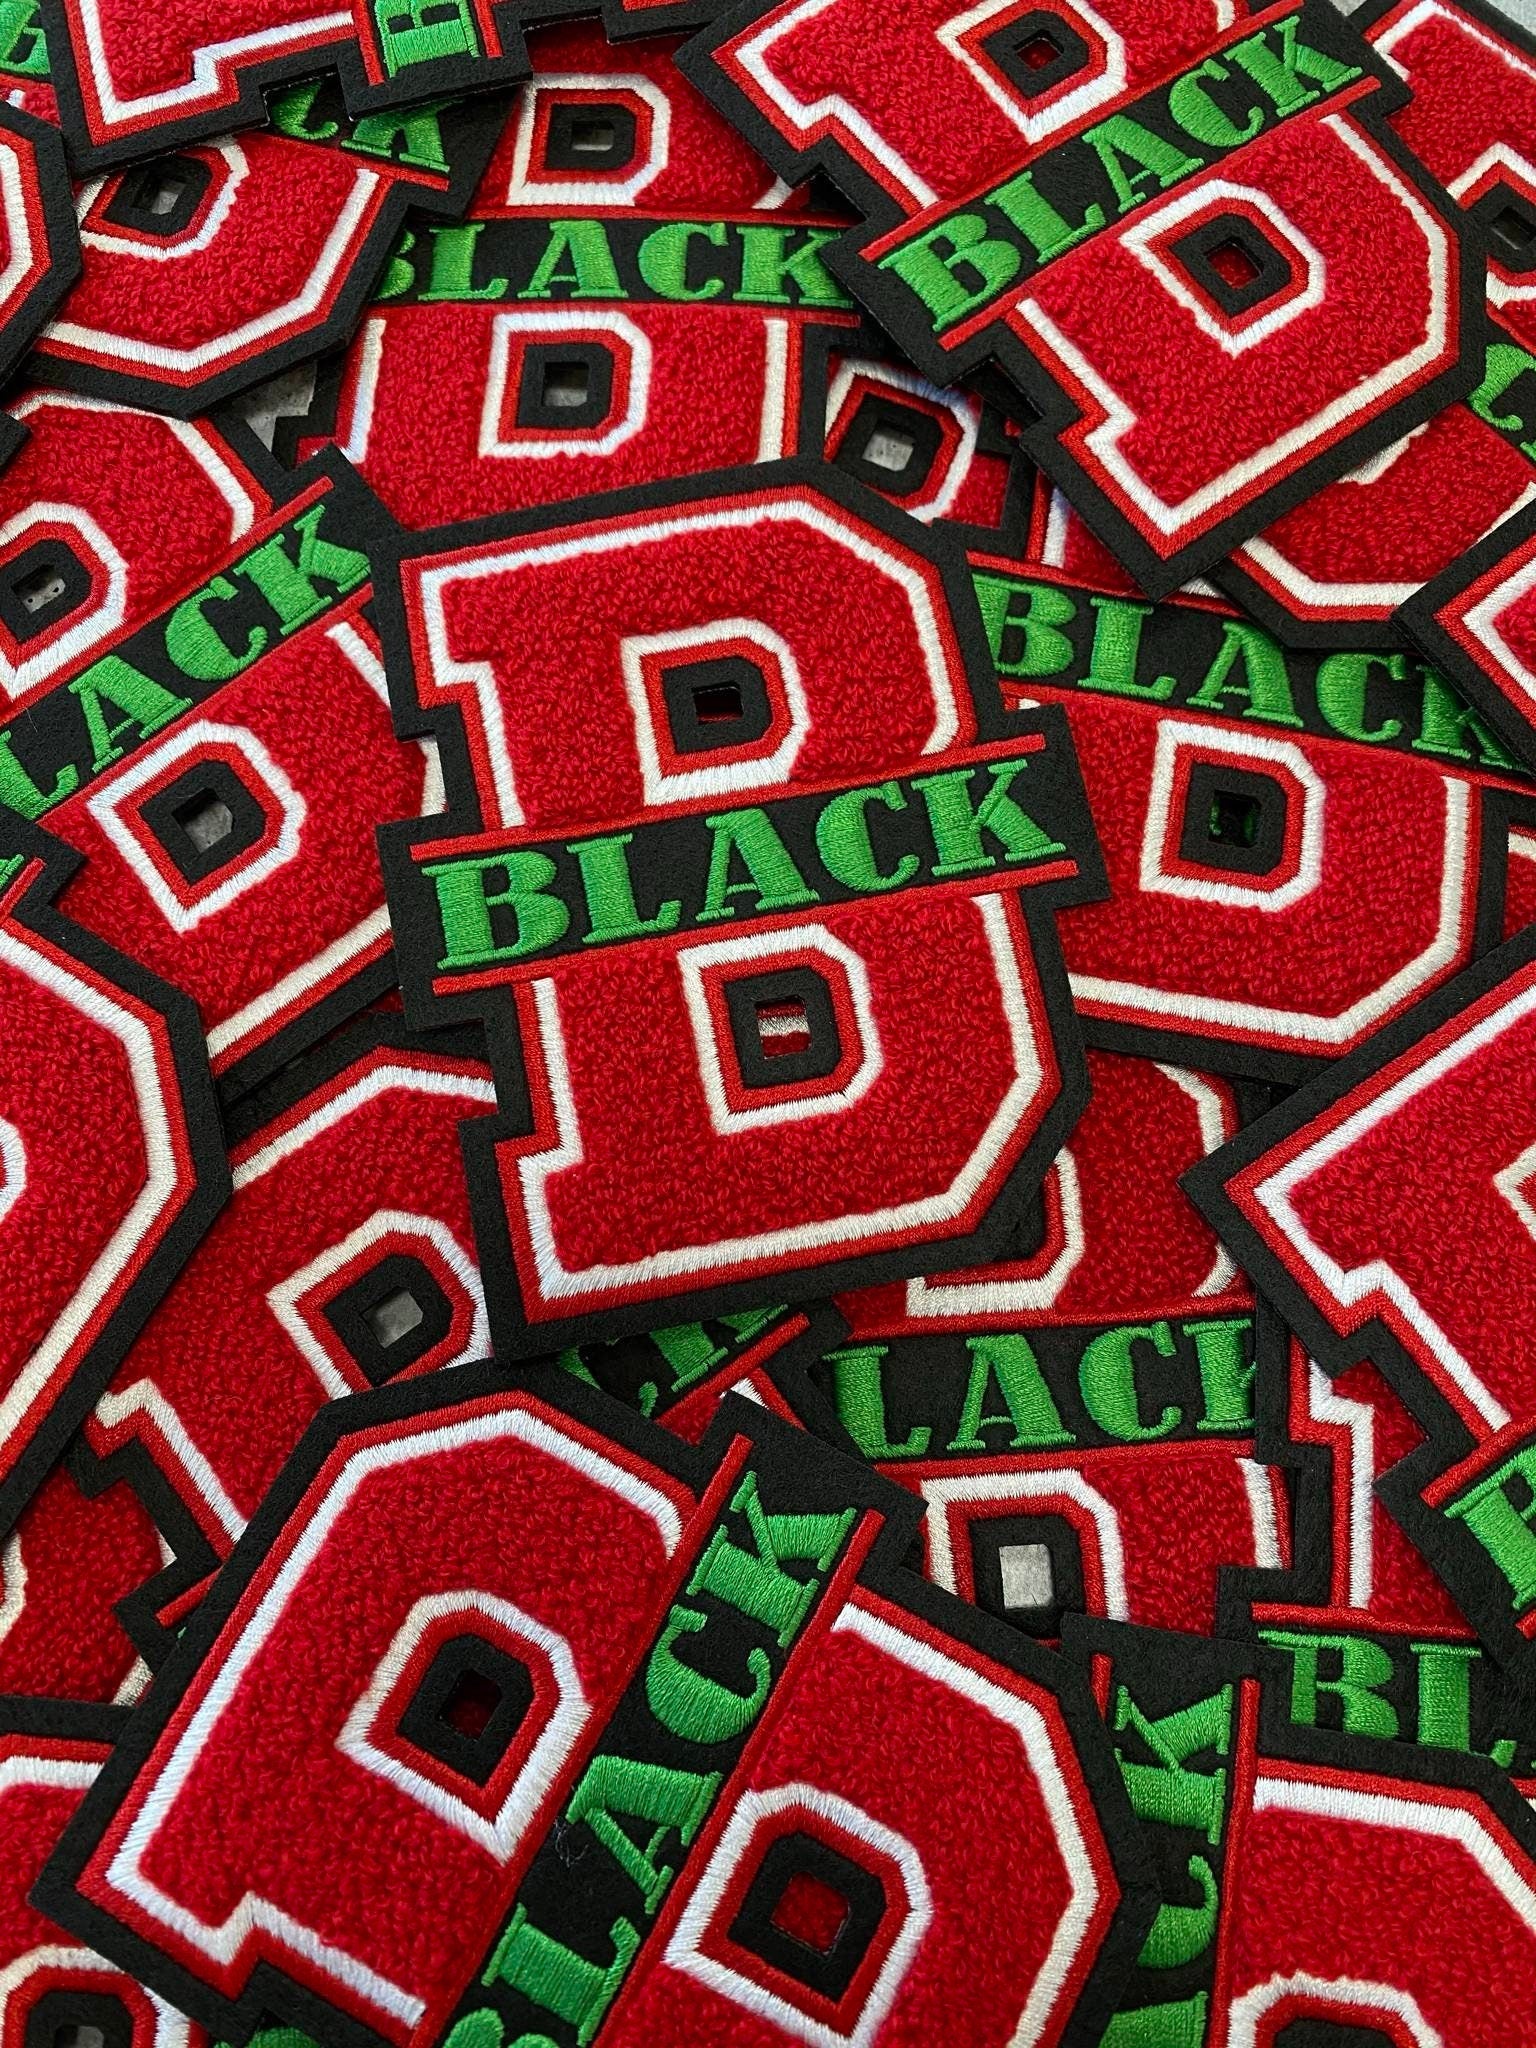 Monogram Letter, "B" Embroidered Word Black, Red, White, Black, Green, Size 6", Iron-on Backing, Medium Applique, Varsity Jackets, DIY Craft